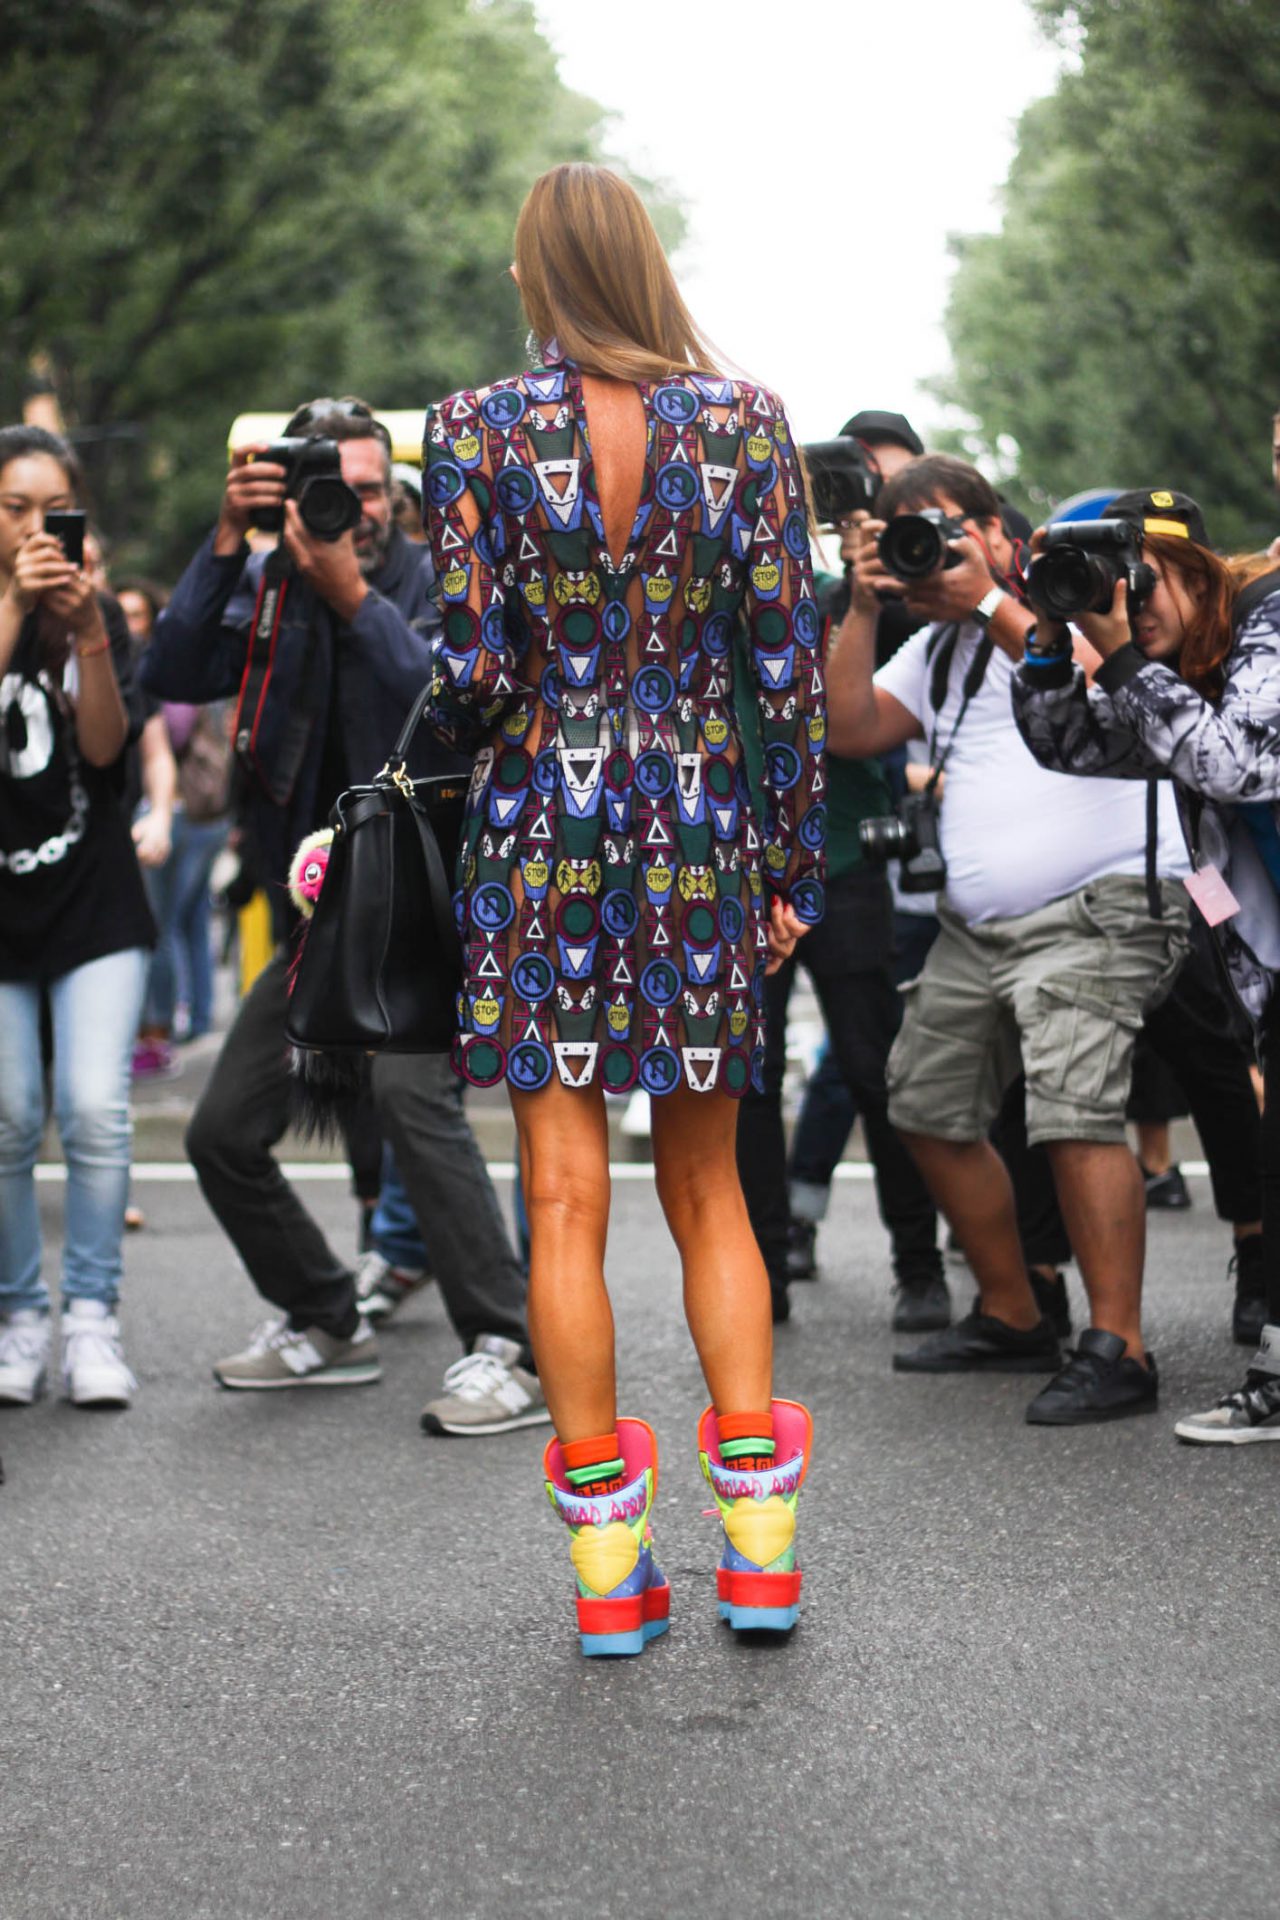 nemesis abbe street style Anna Dello Russo in Paris wearing Mary katrantzou